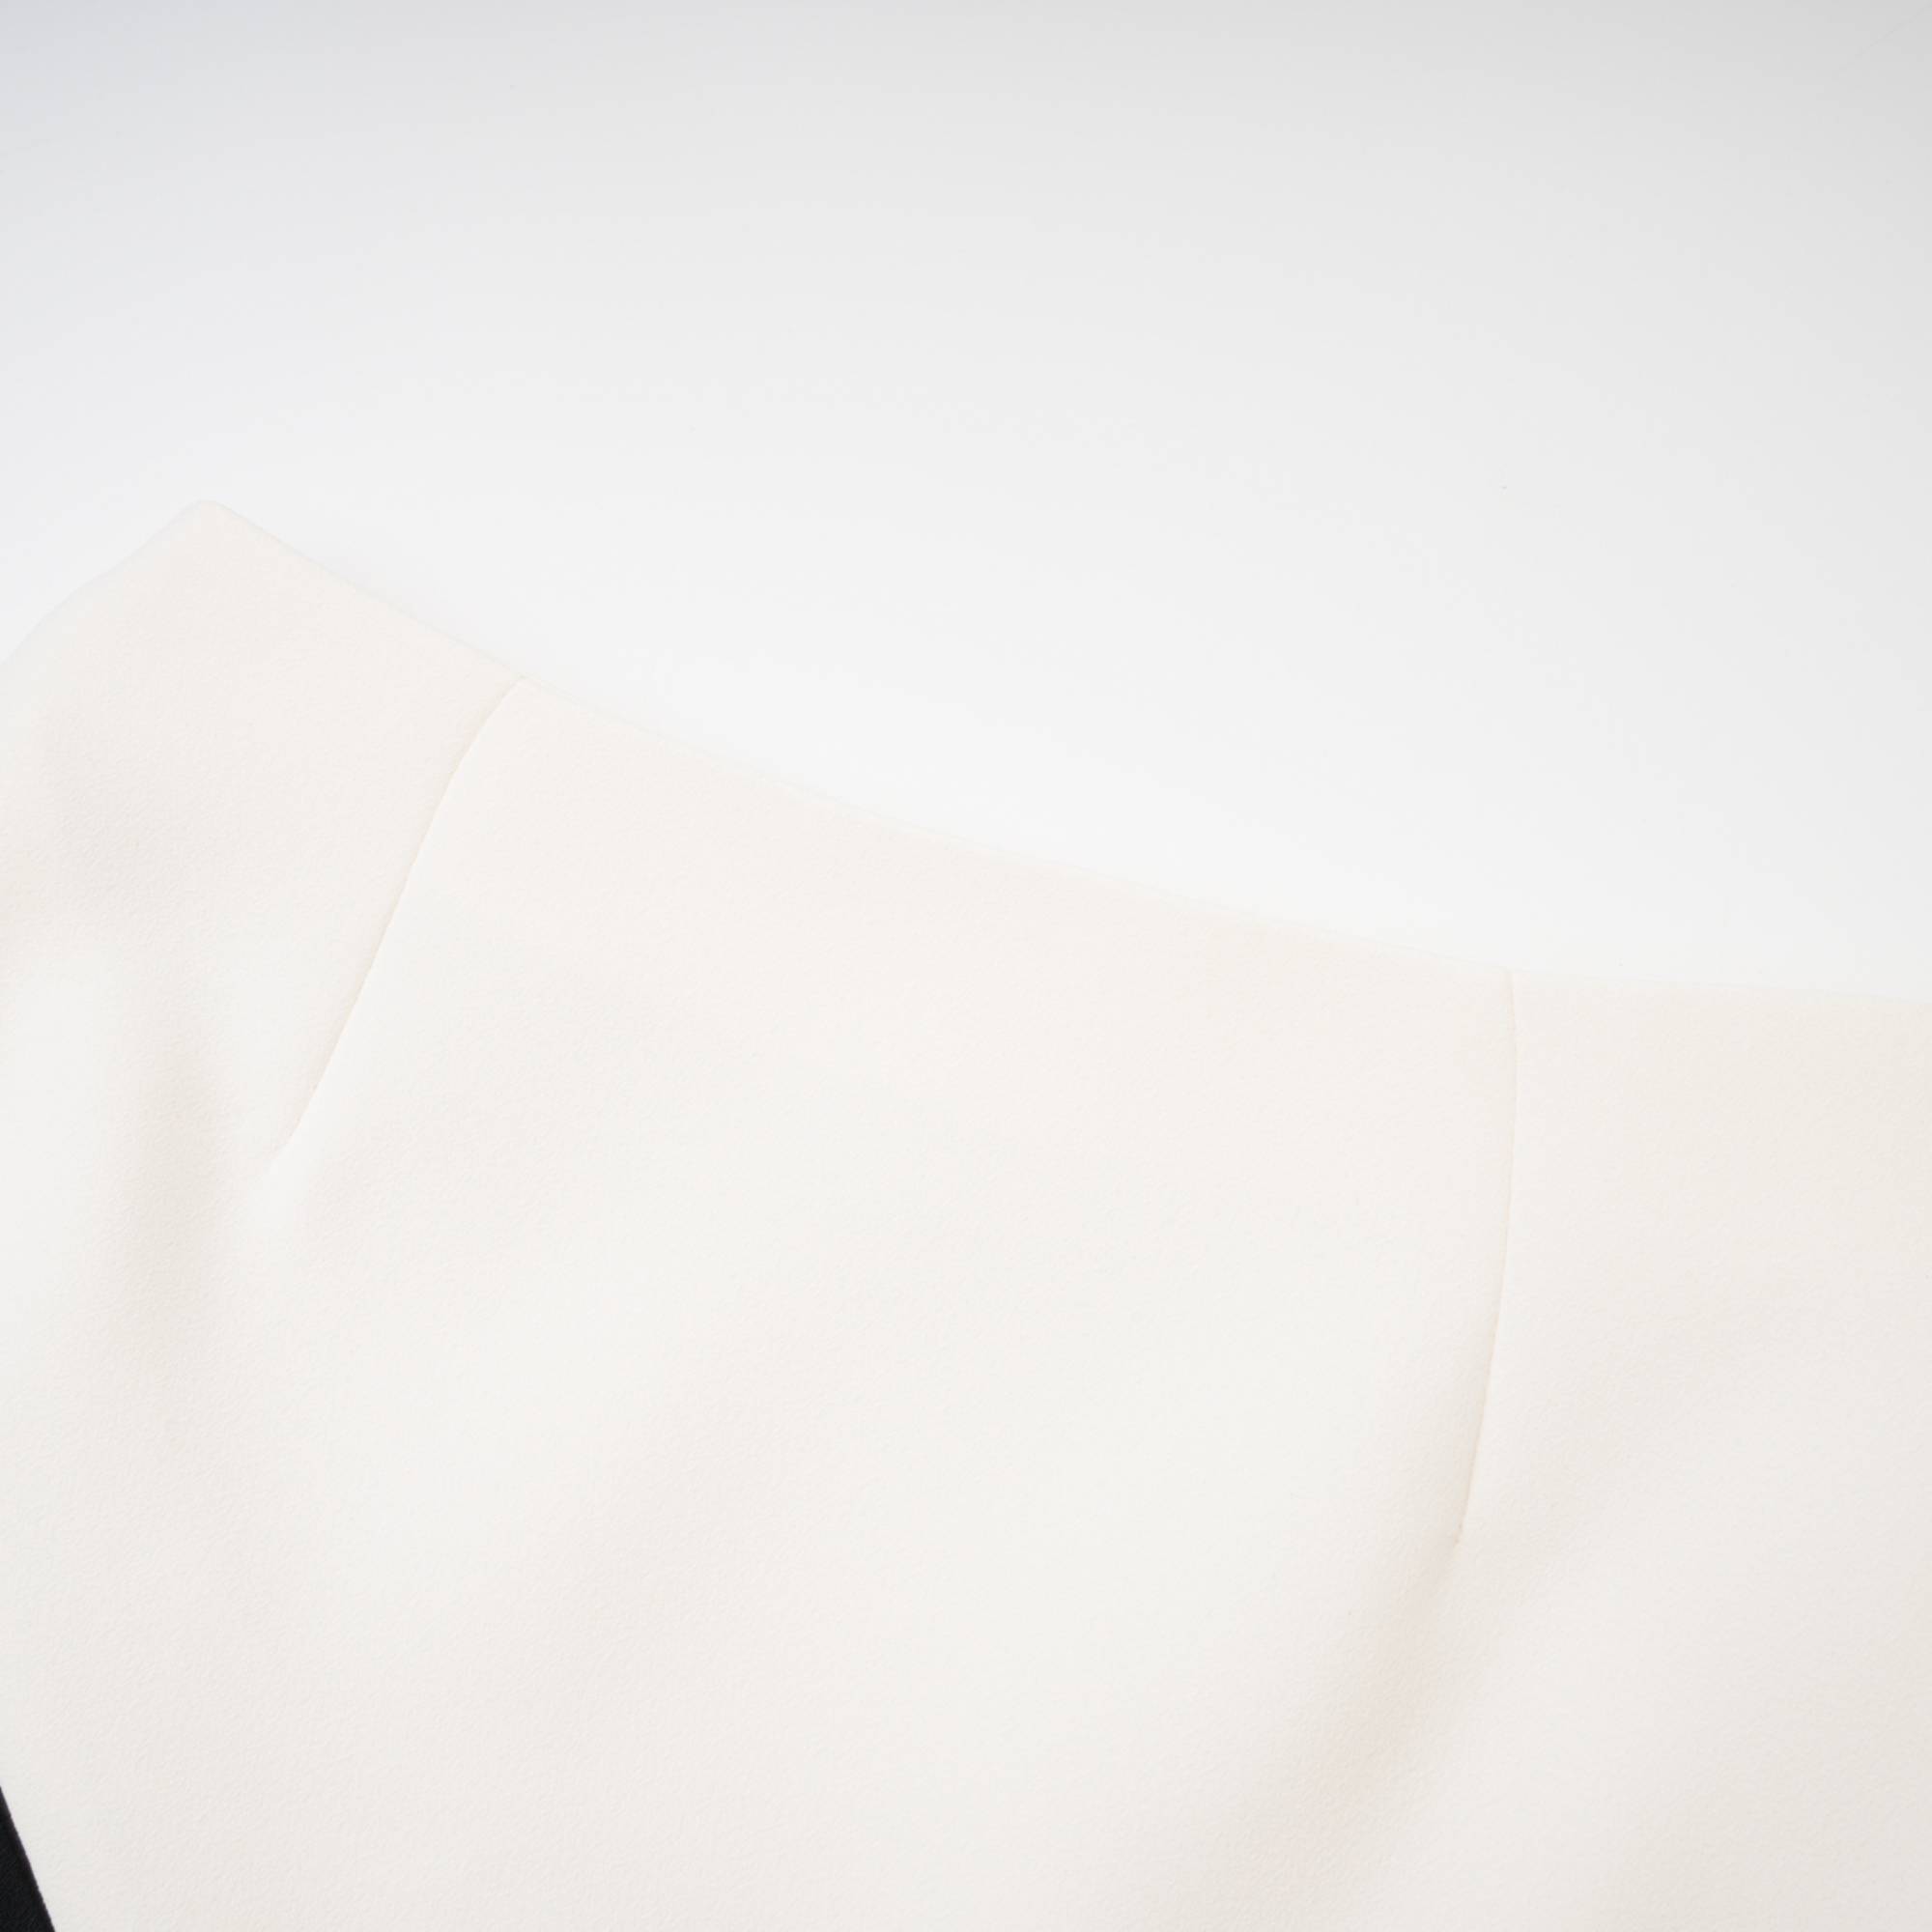 Vespera jacket & skirt matching set - Miss Rosier - Women's Online Boutique